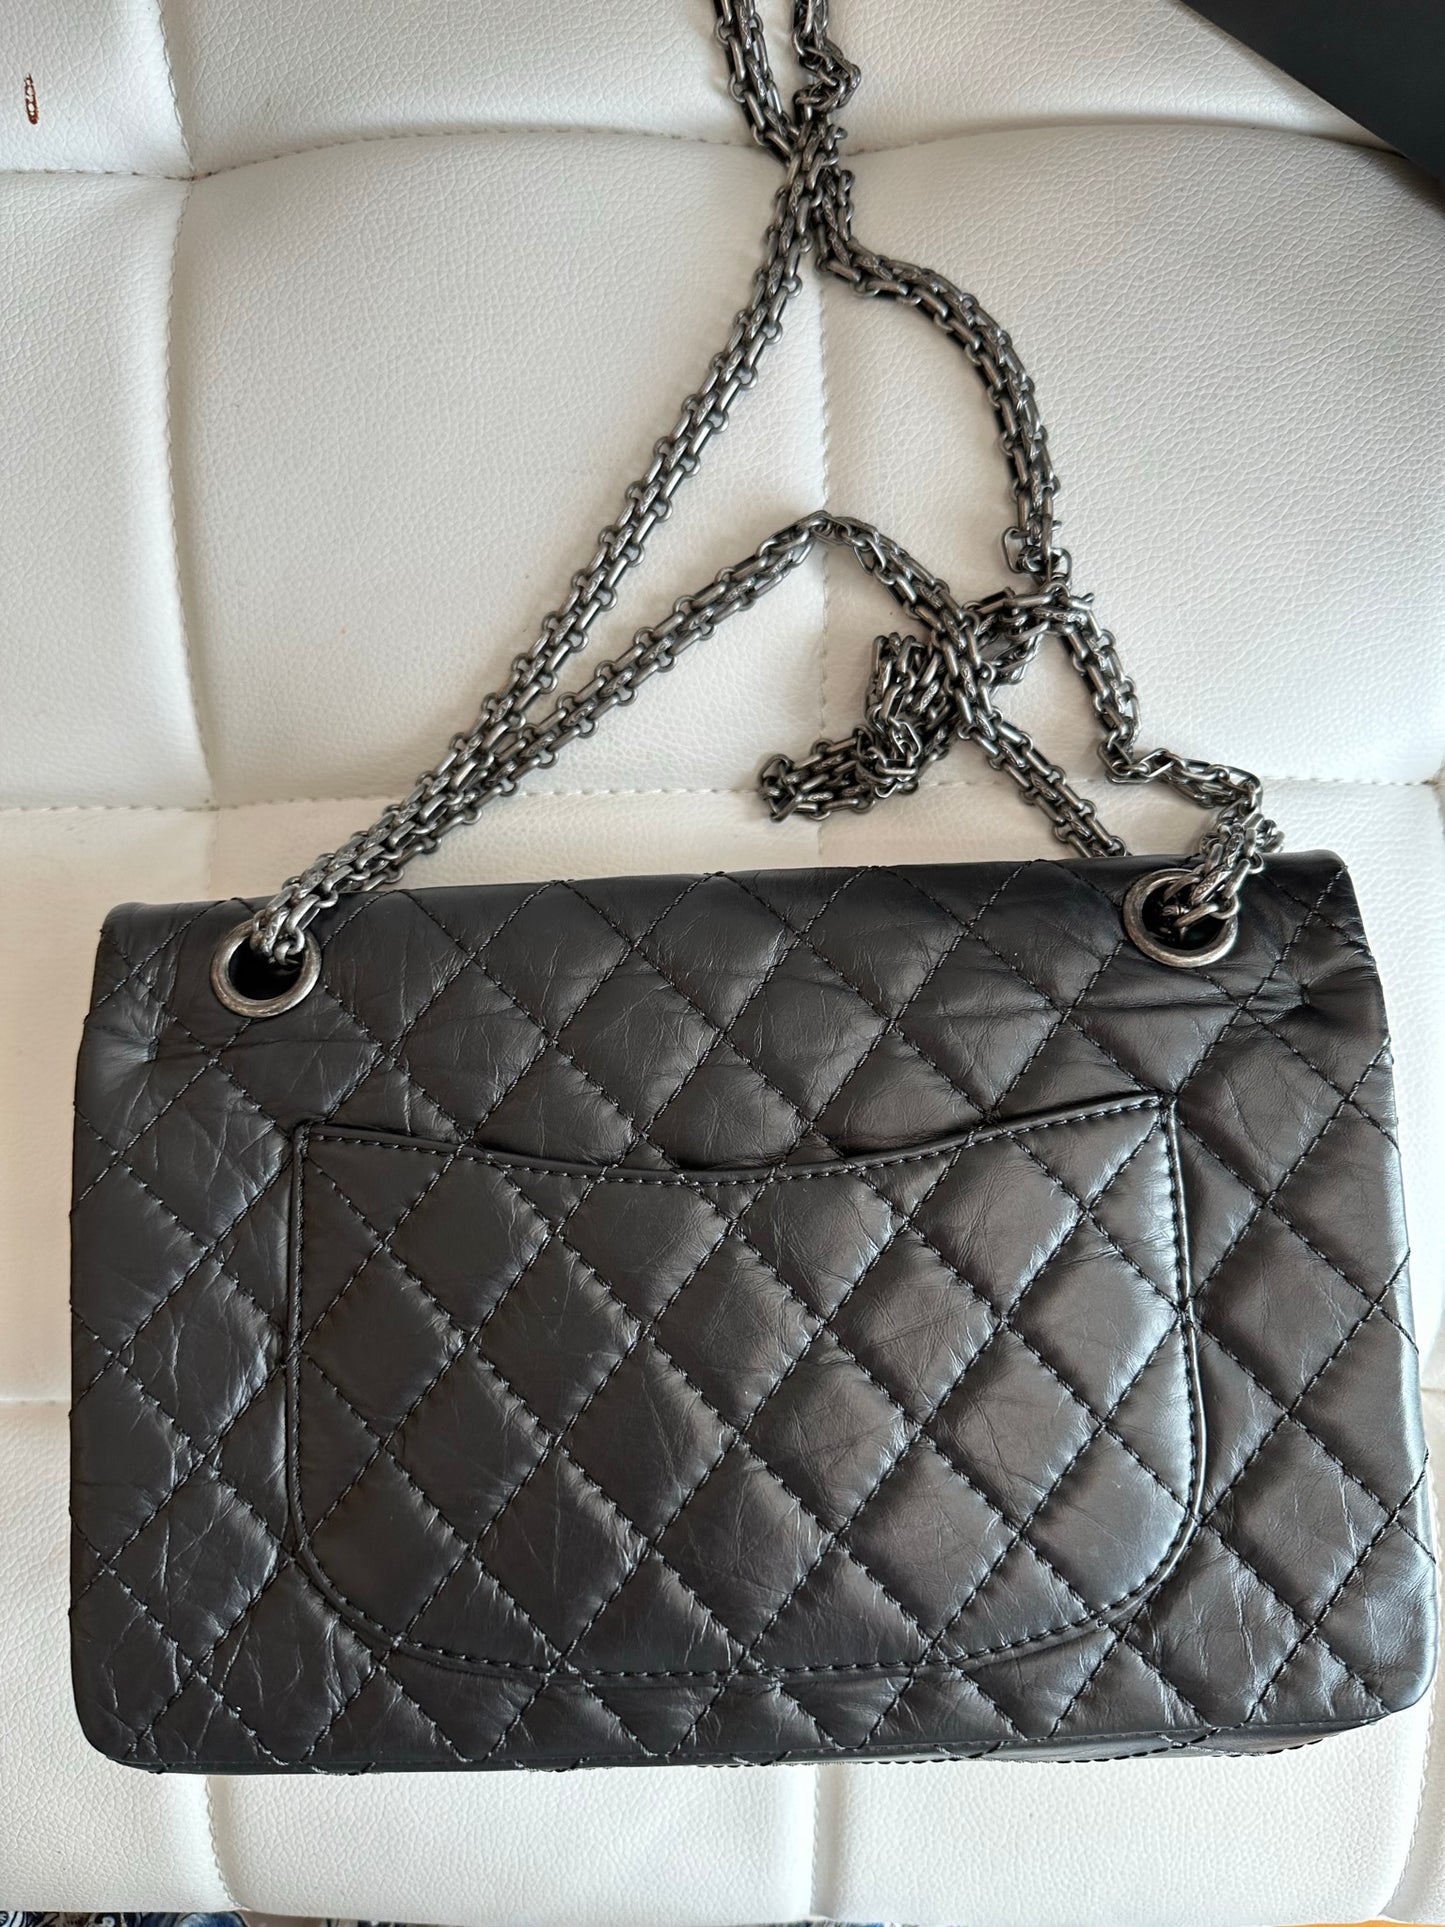 Chanel 2020 aged calfskin 2.55 medium 226 black ruthenium flap bag full set